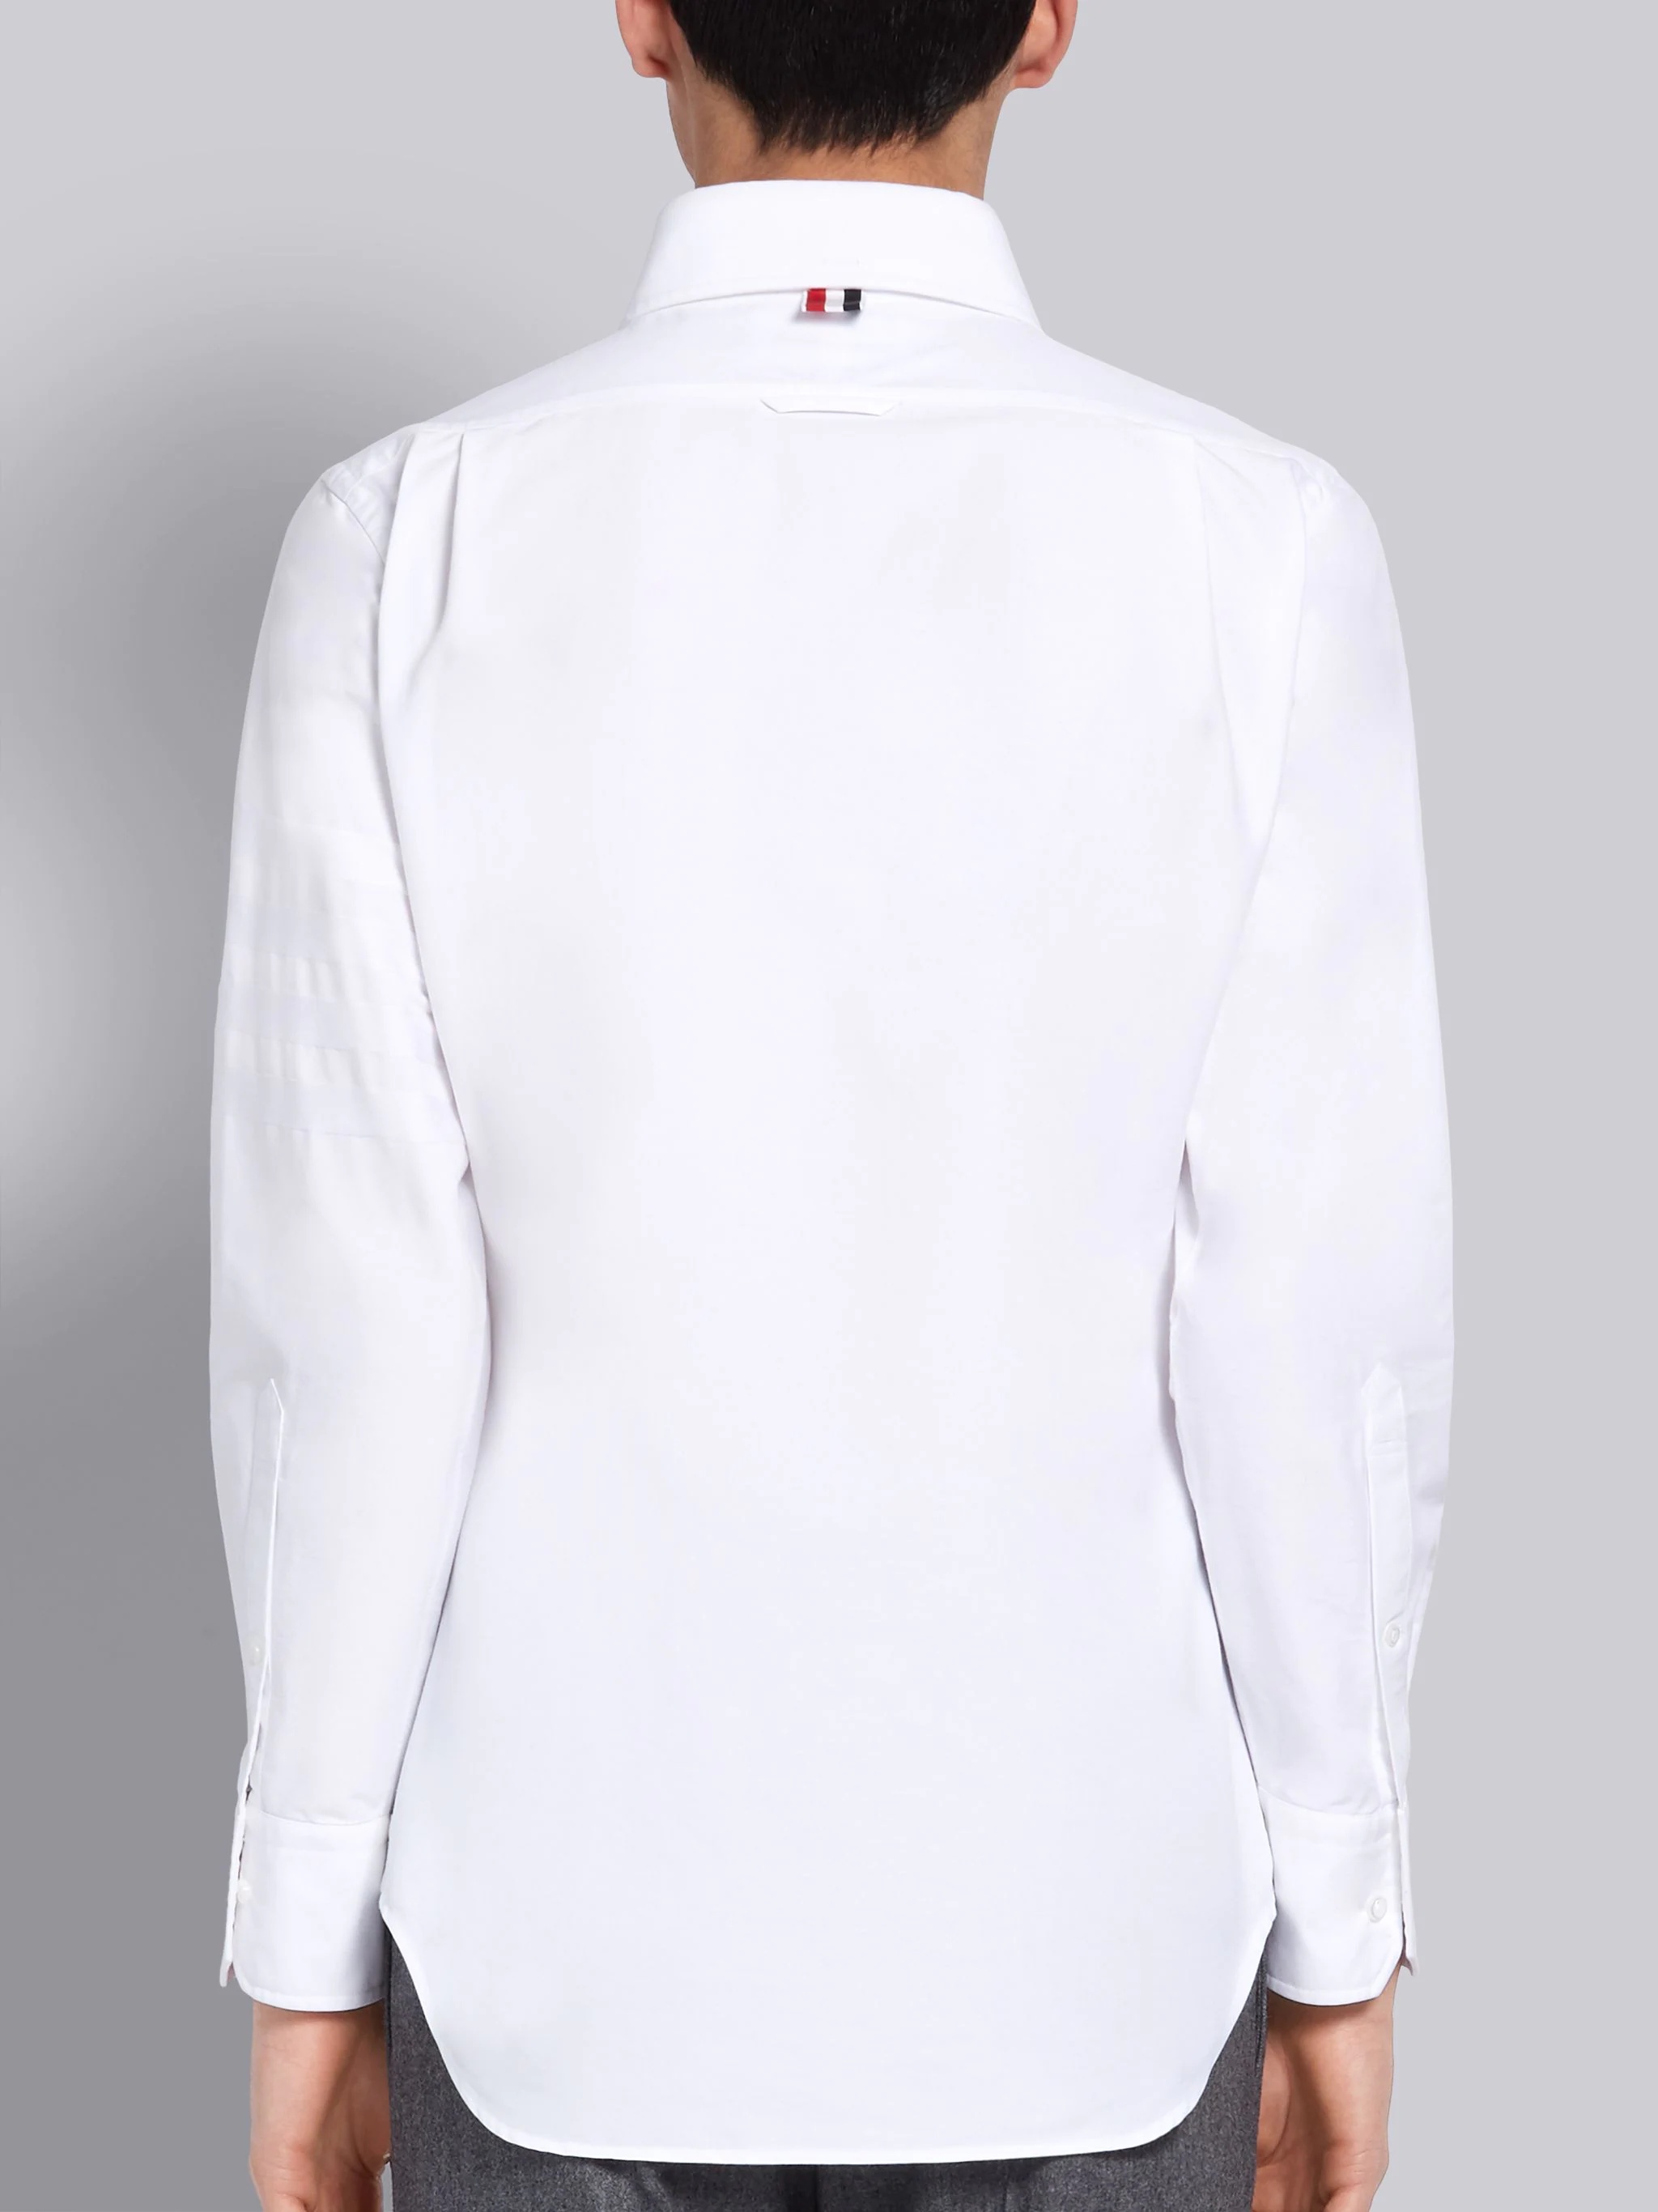 White Cotton Oxford Long Sleeve Satin Weave 4-Bar Shirt - 4